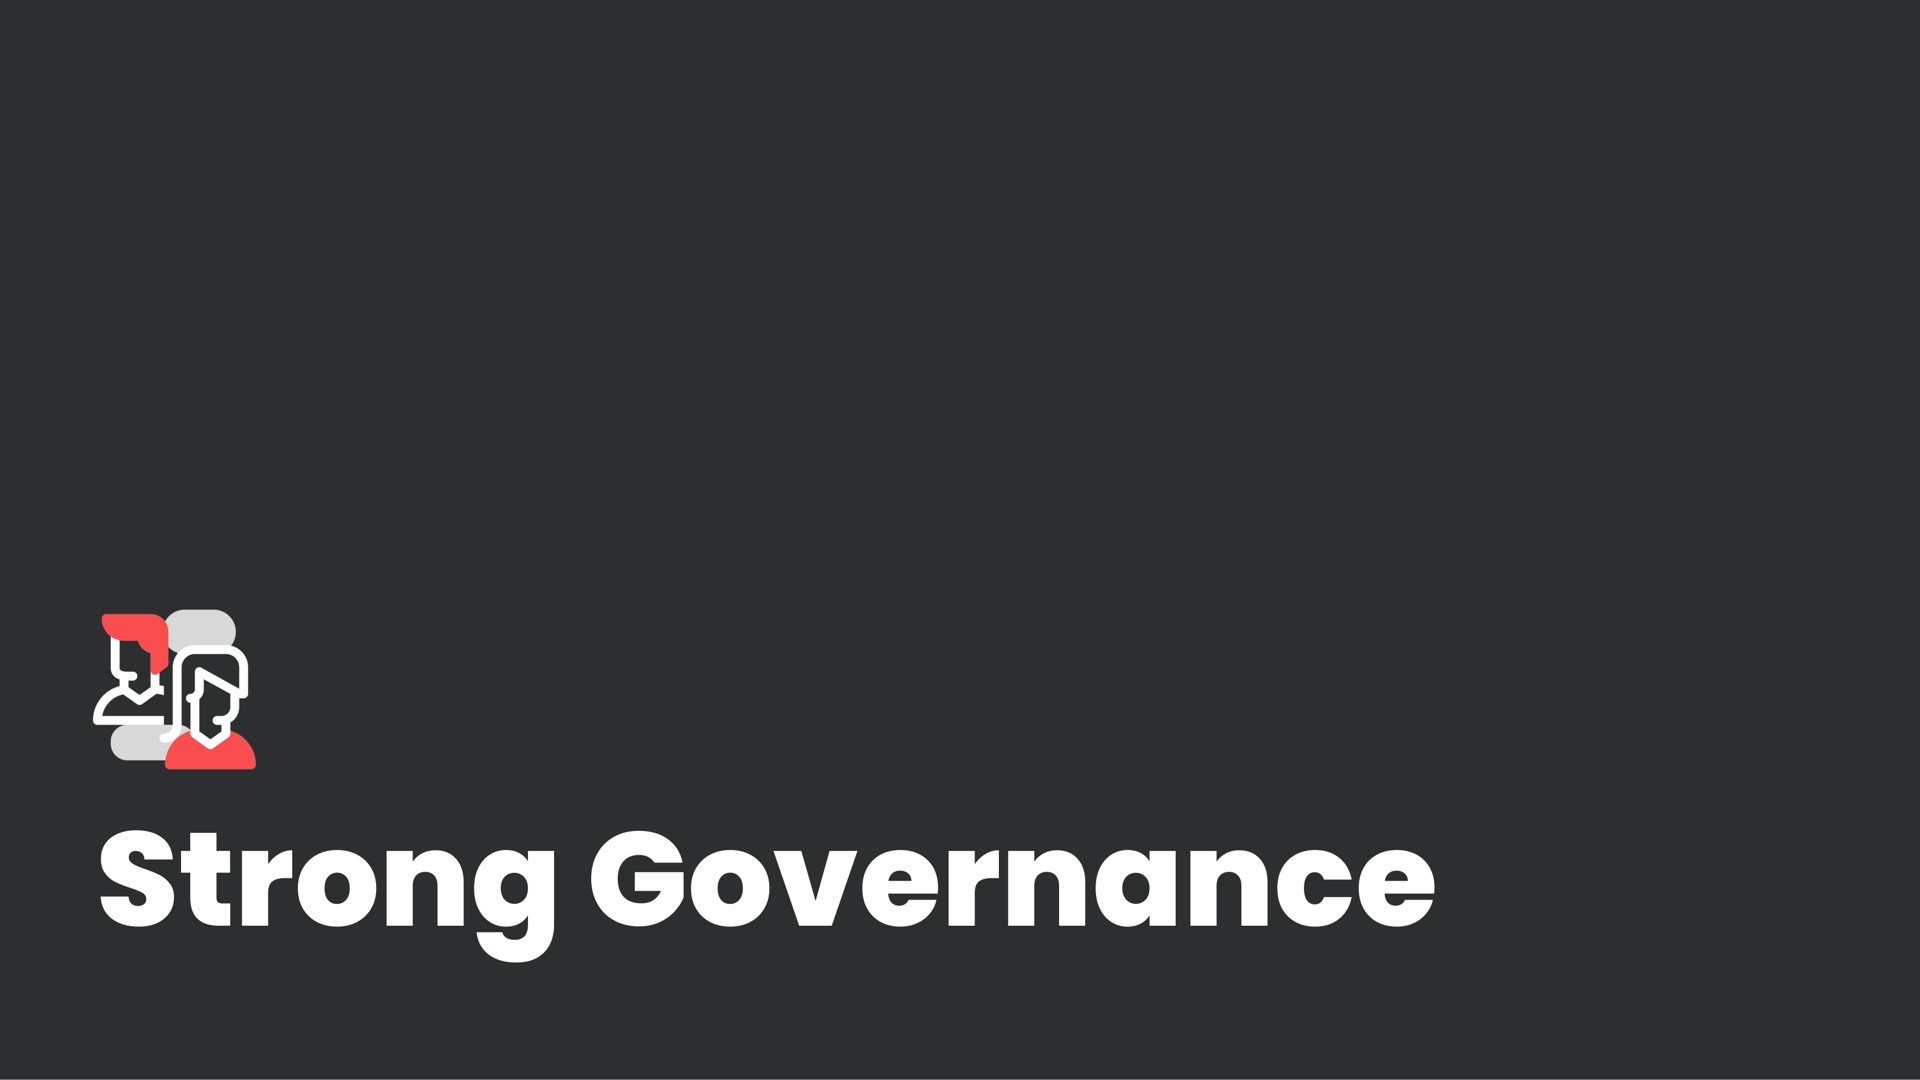 strong governance a | Yelp